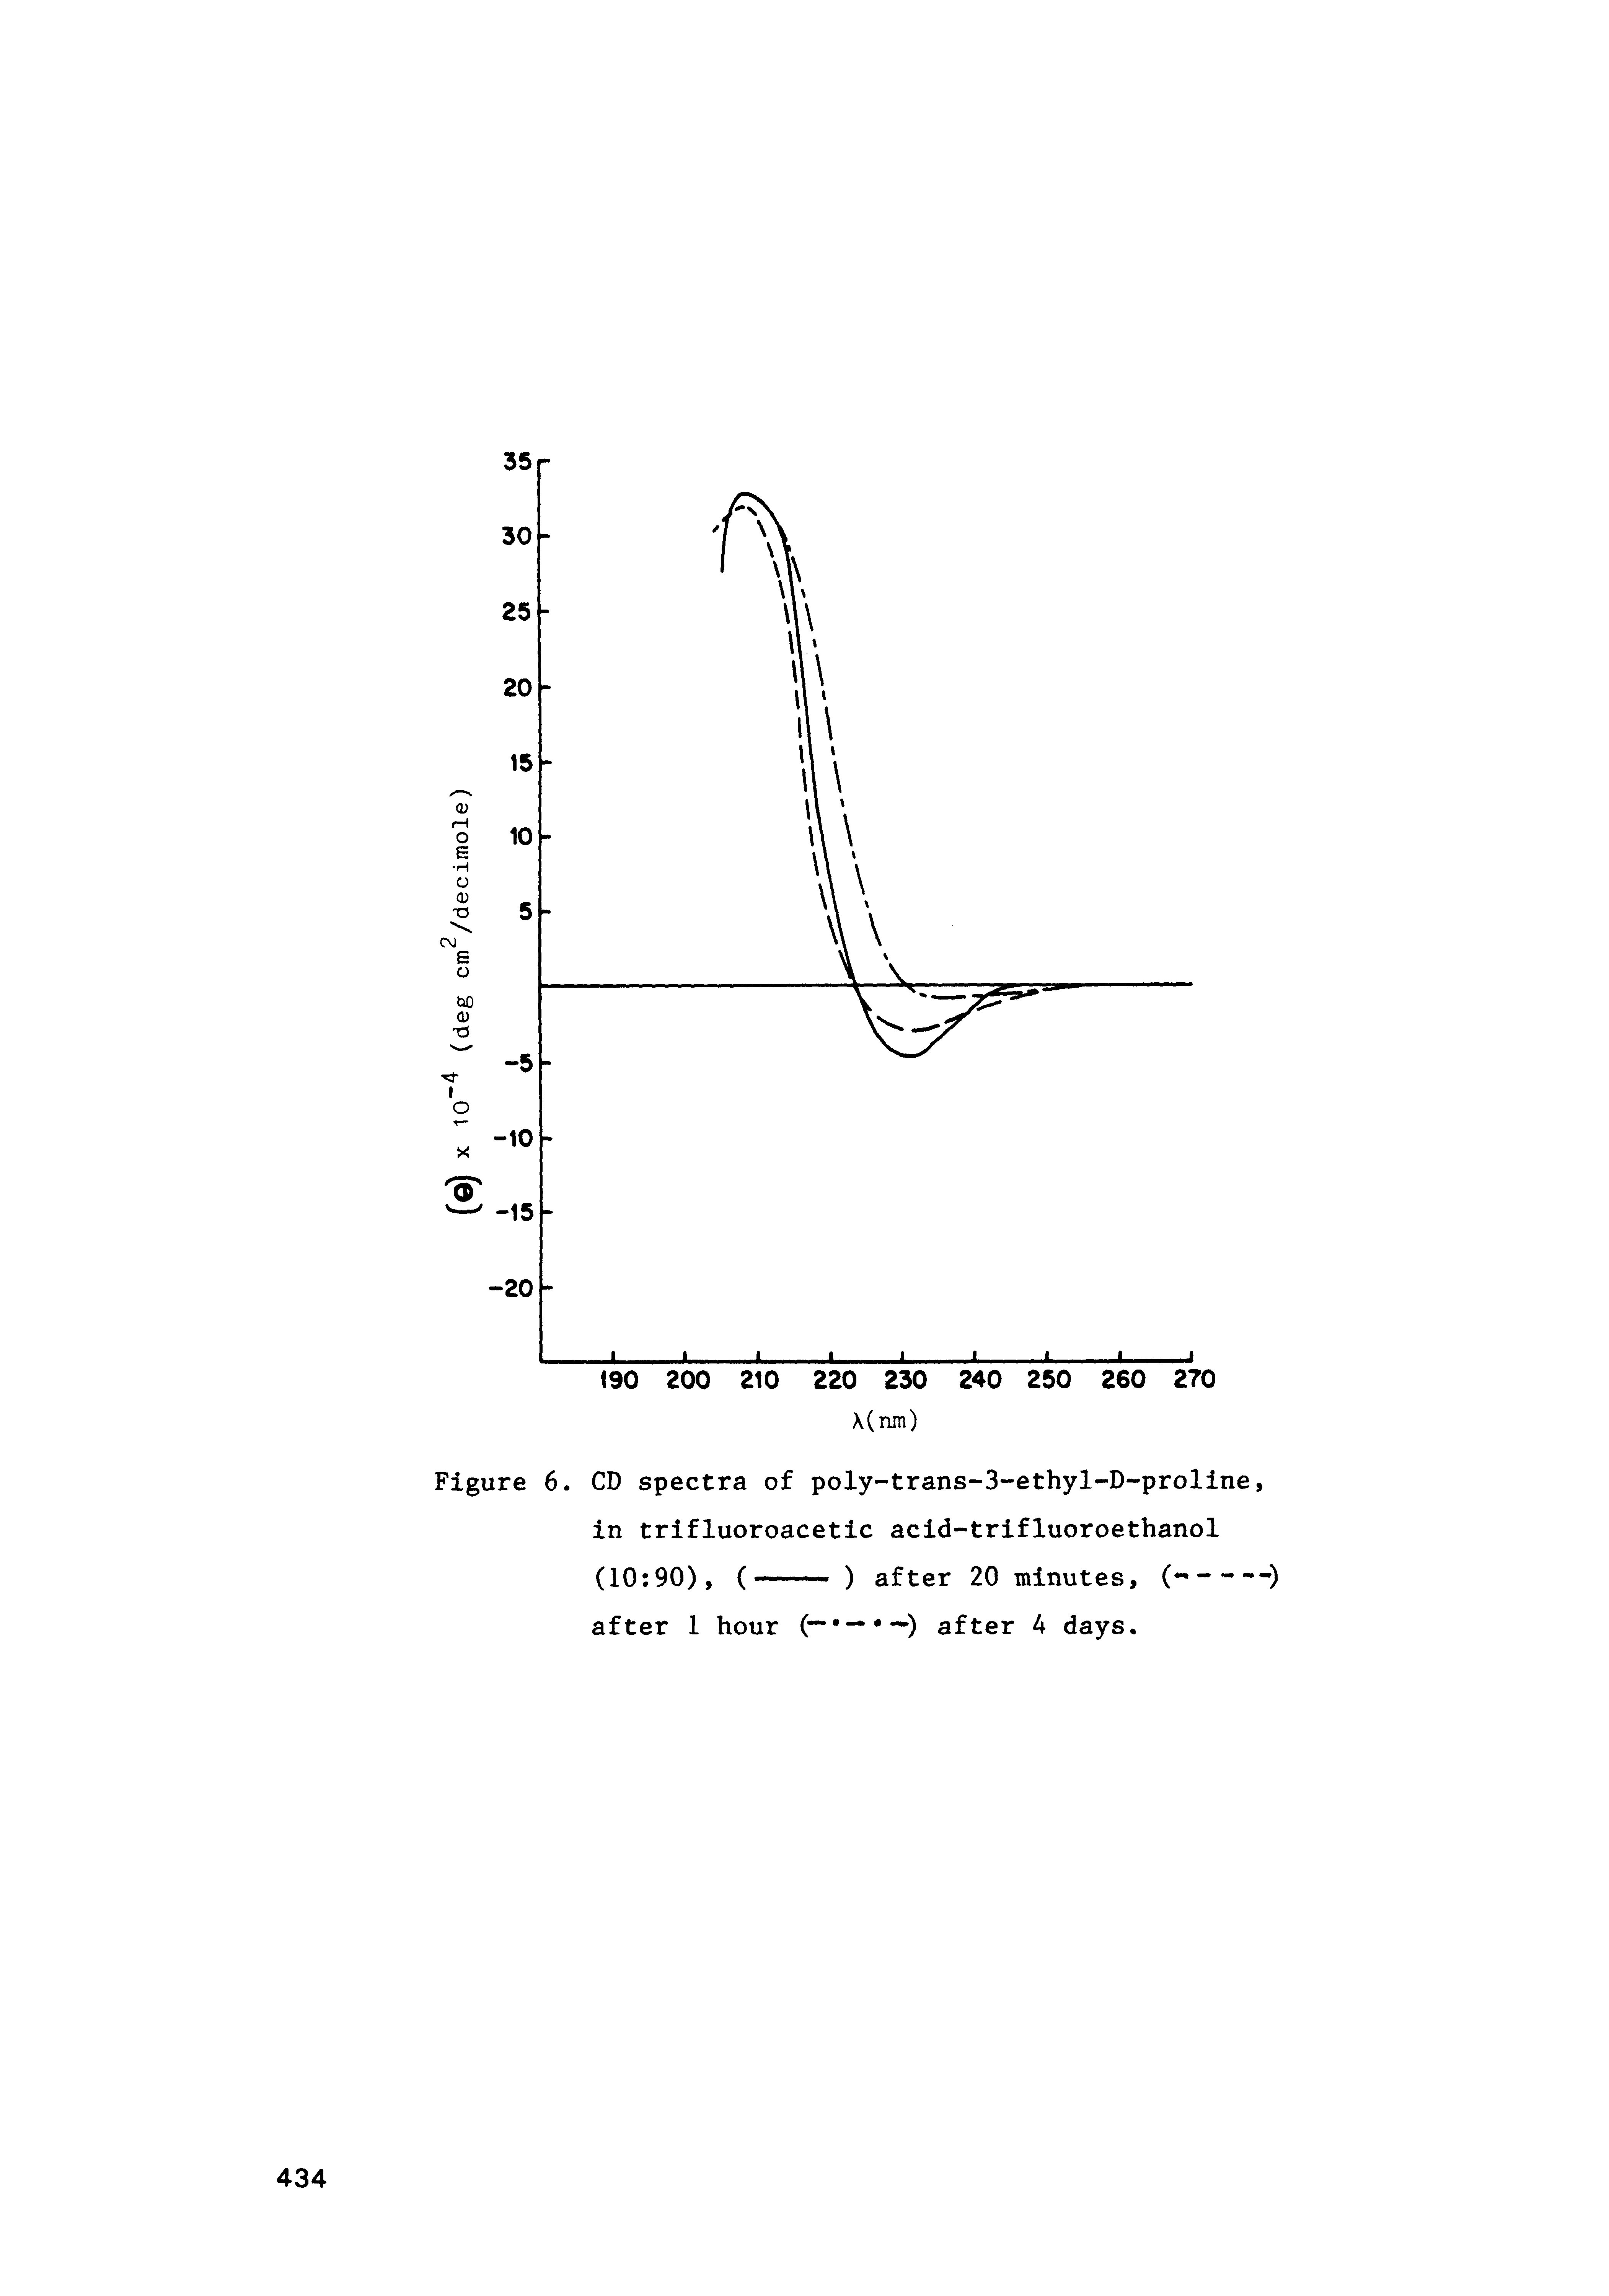 Figure 6. CD spectra of poly-trans-3-ethyl-D-proline, in trifluoroacetic acid trifluoroethanol...